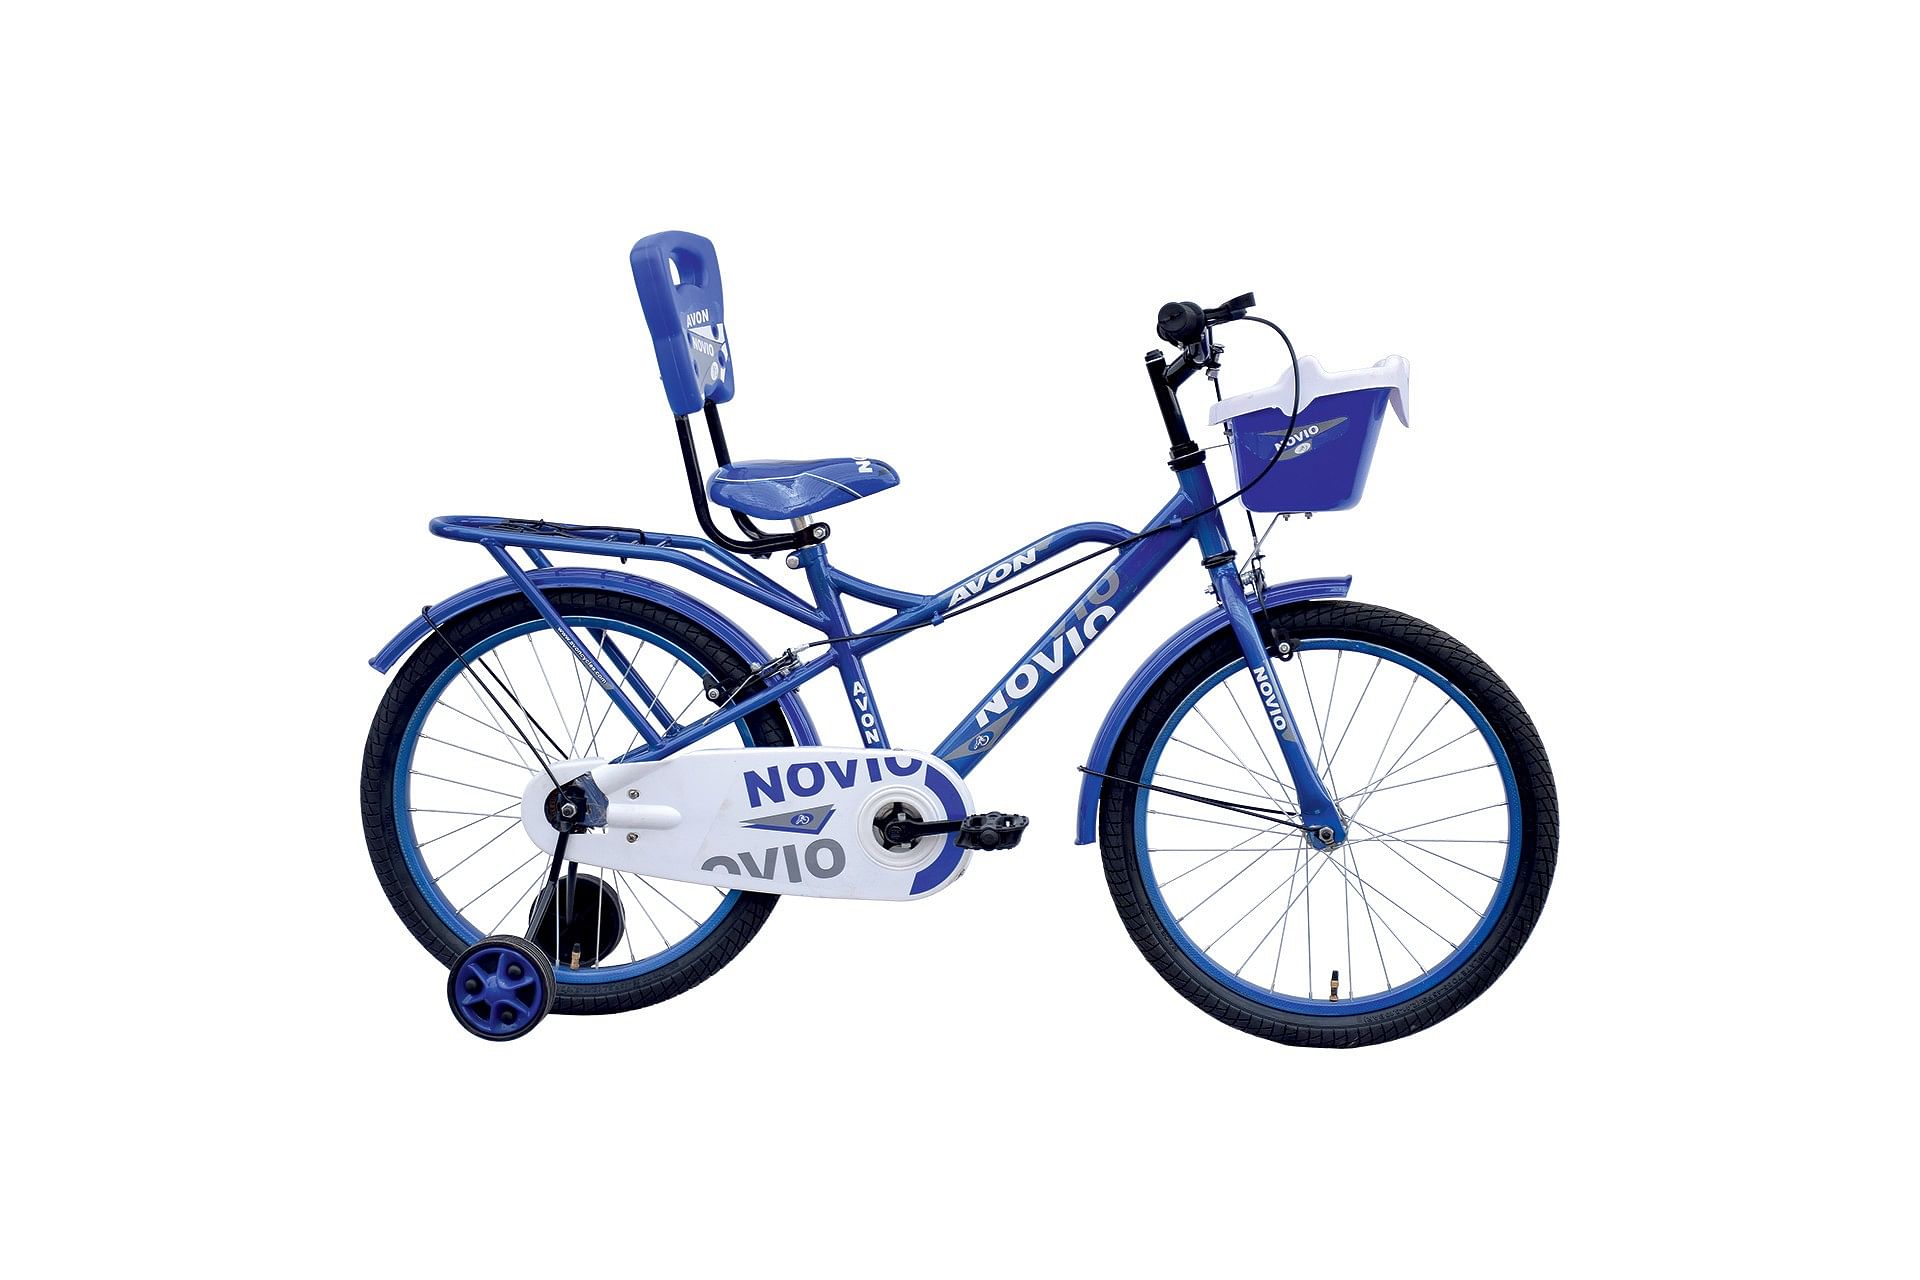 Avon Novio 20T cycle